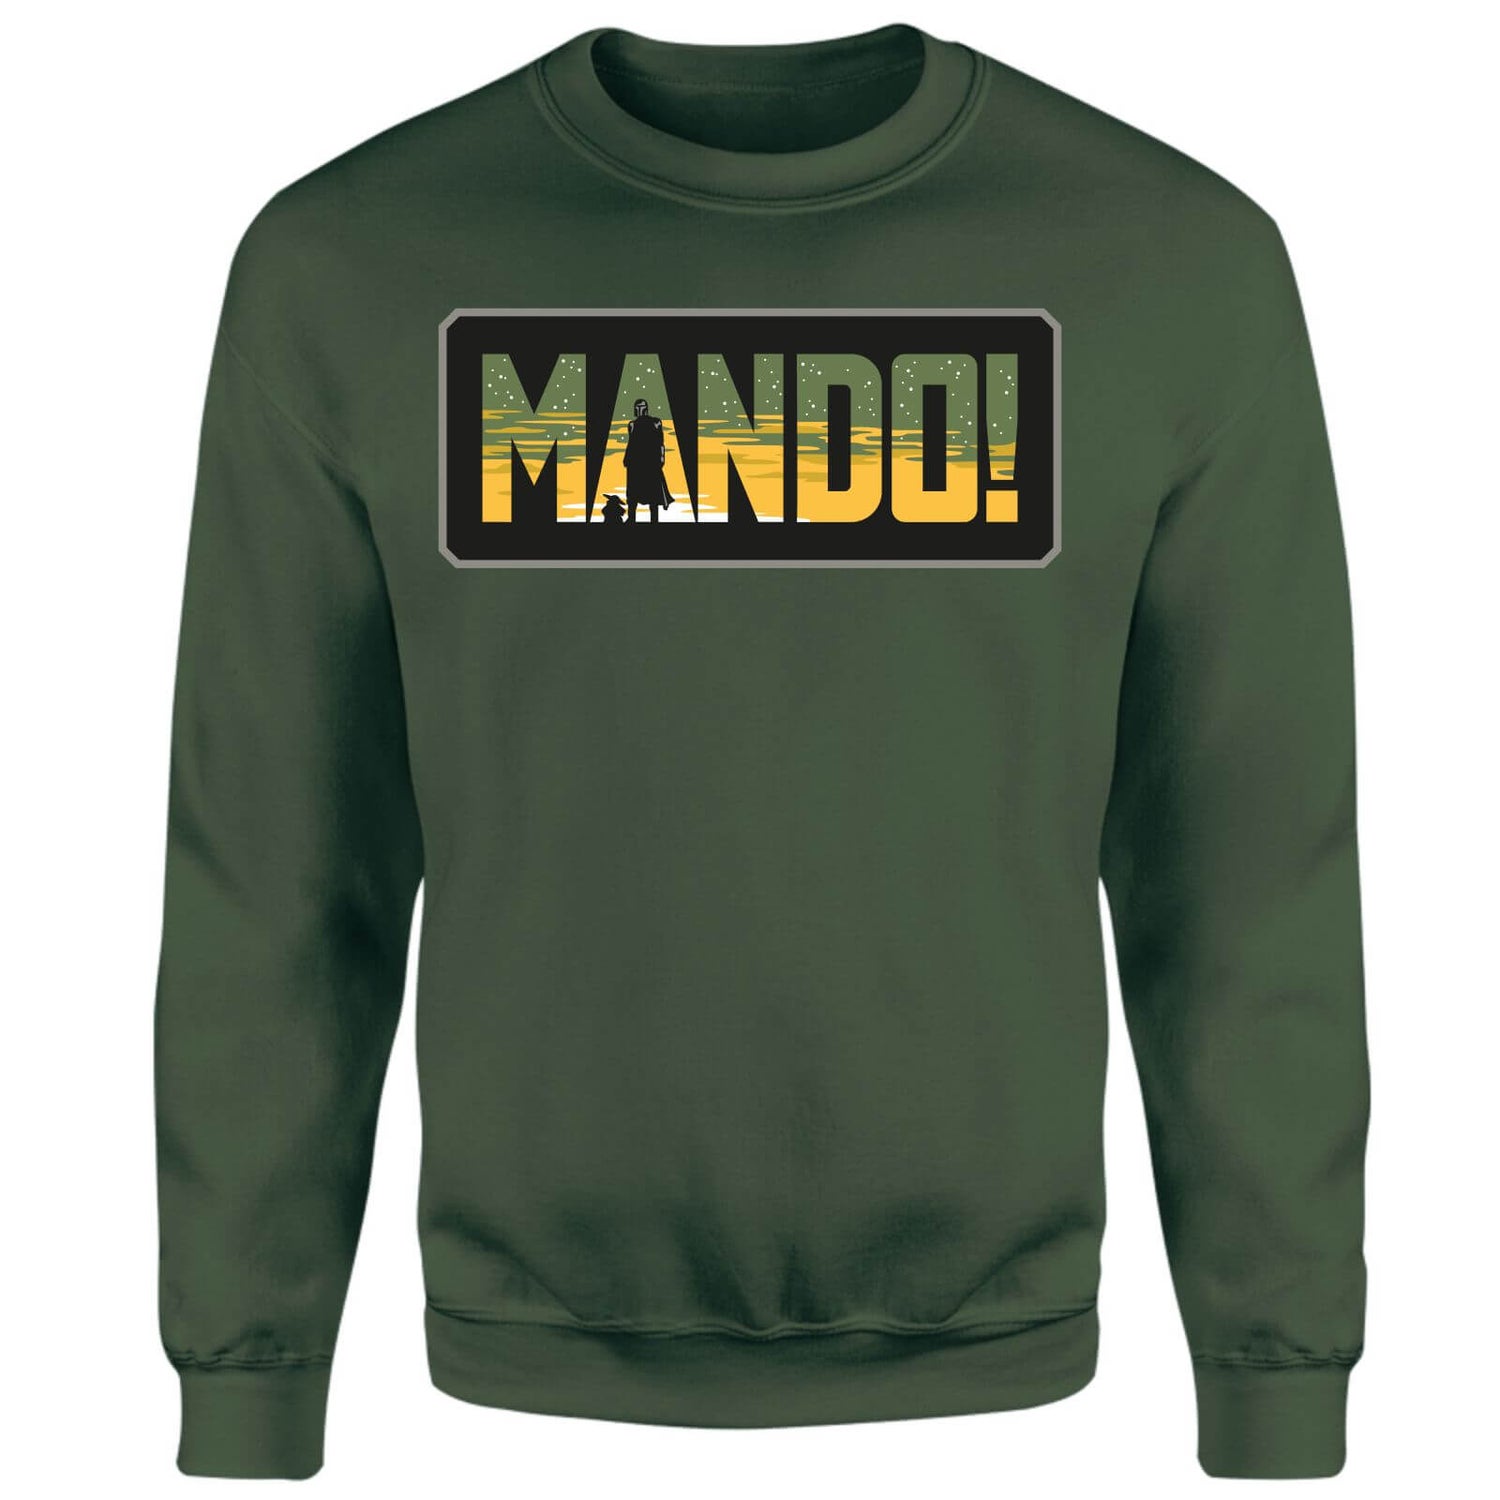 Star Wars The Mandalorian Mando! Sweatshirt - Green